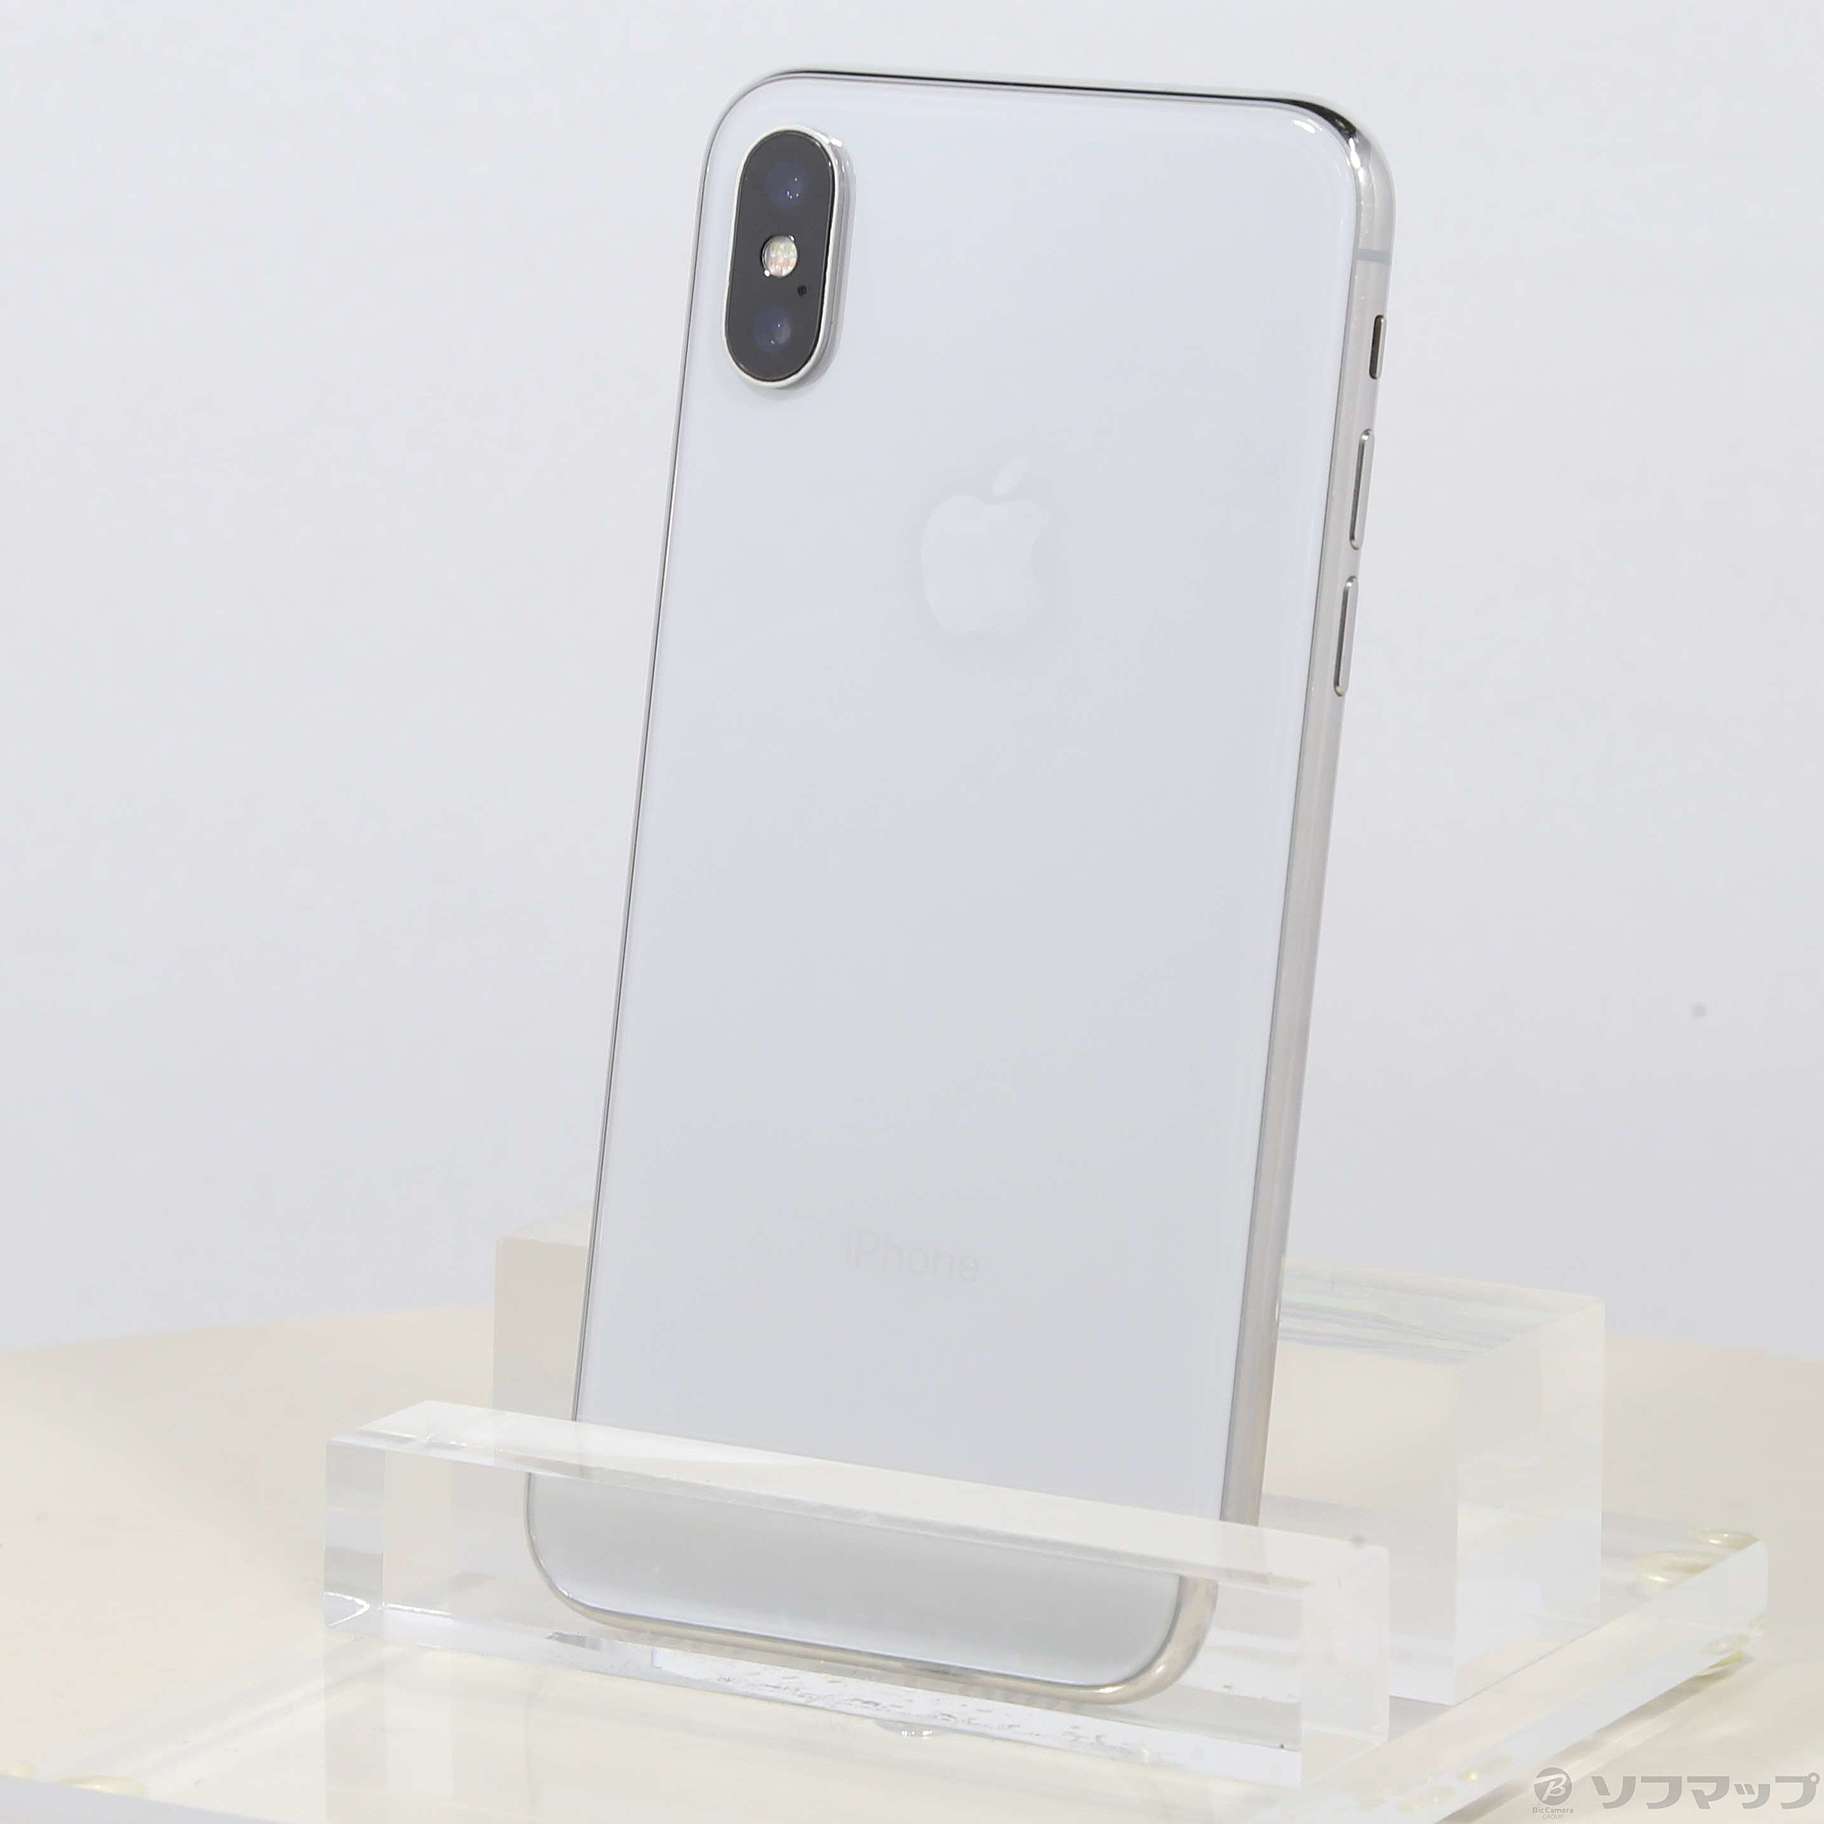 iPhoneX 64G Silver